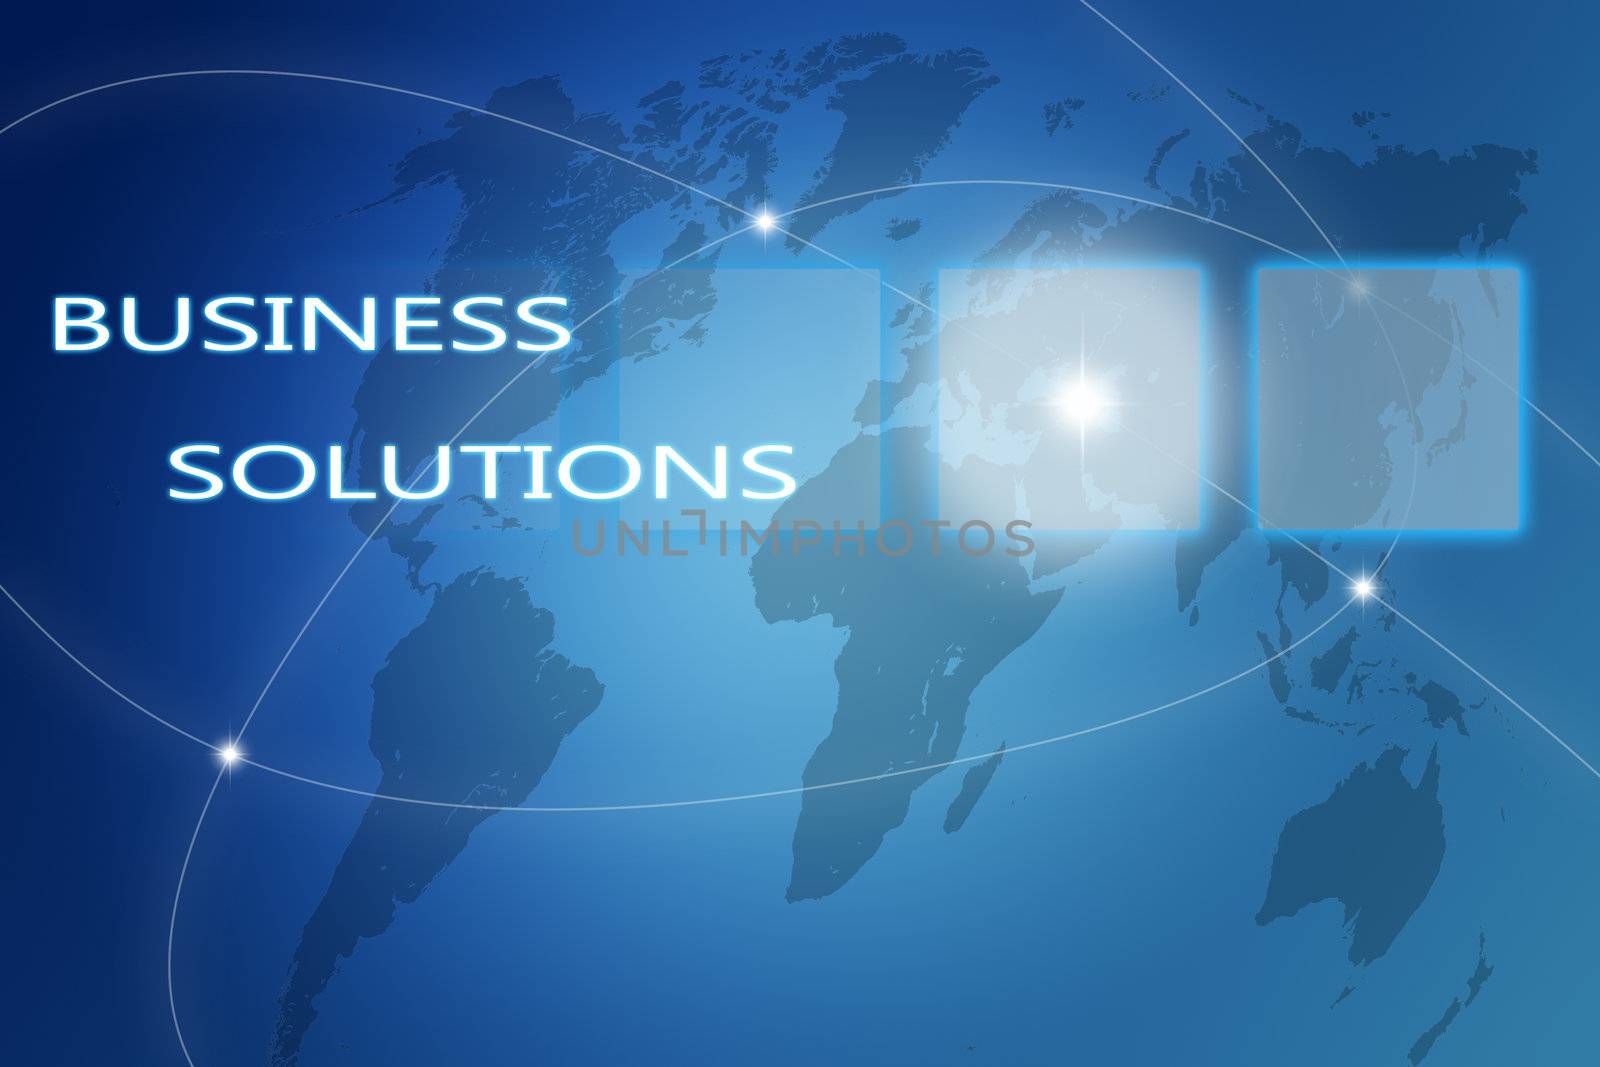 Business Solutions by Mazirama